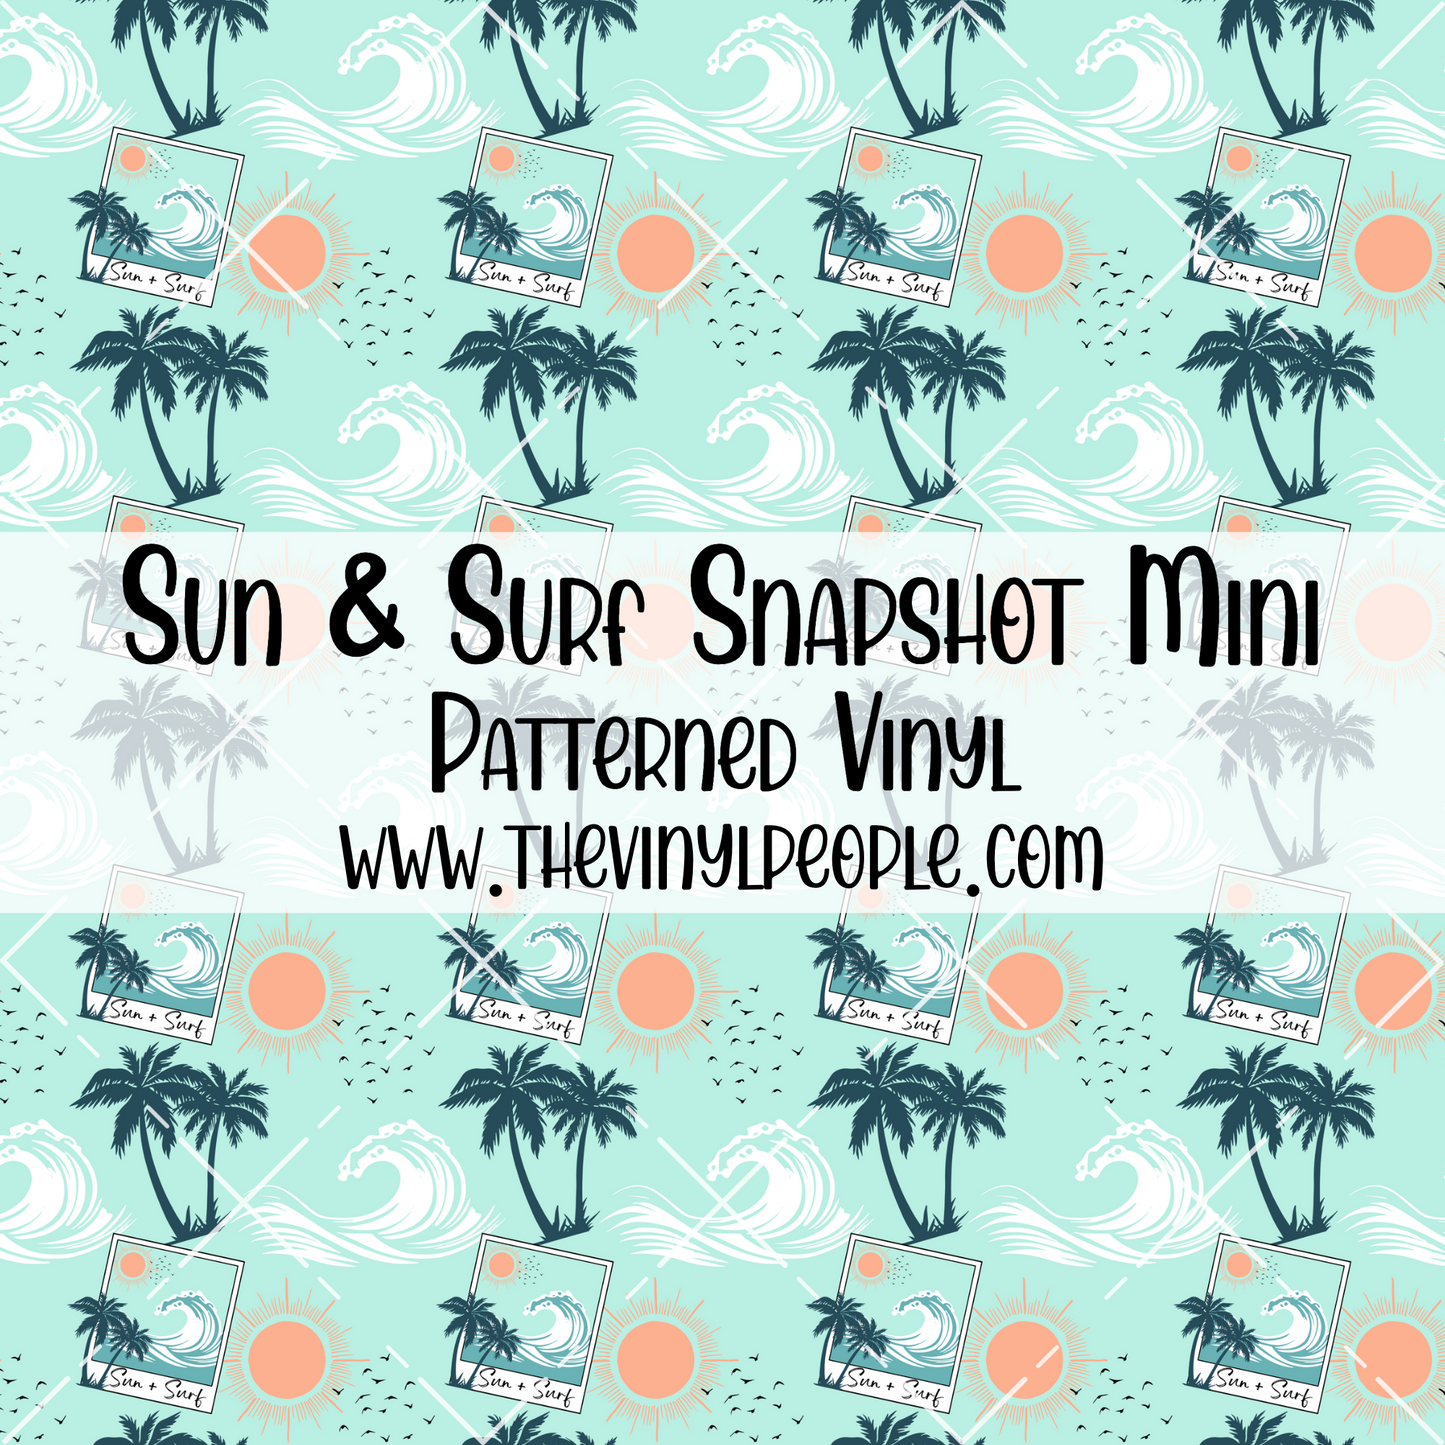 Sun & Surf Snapshot Patterned Vinyl